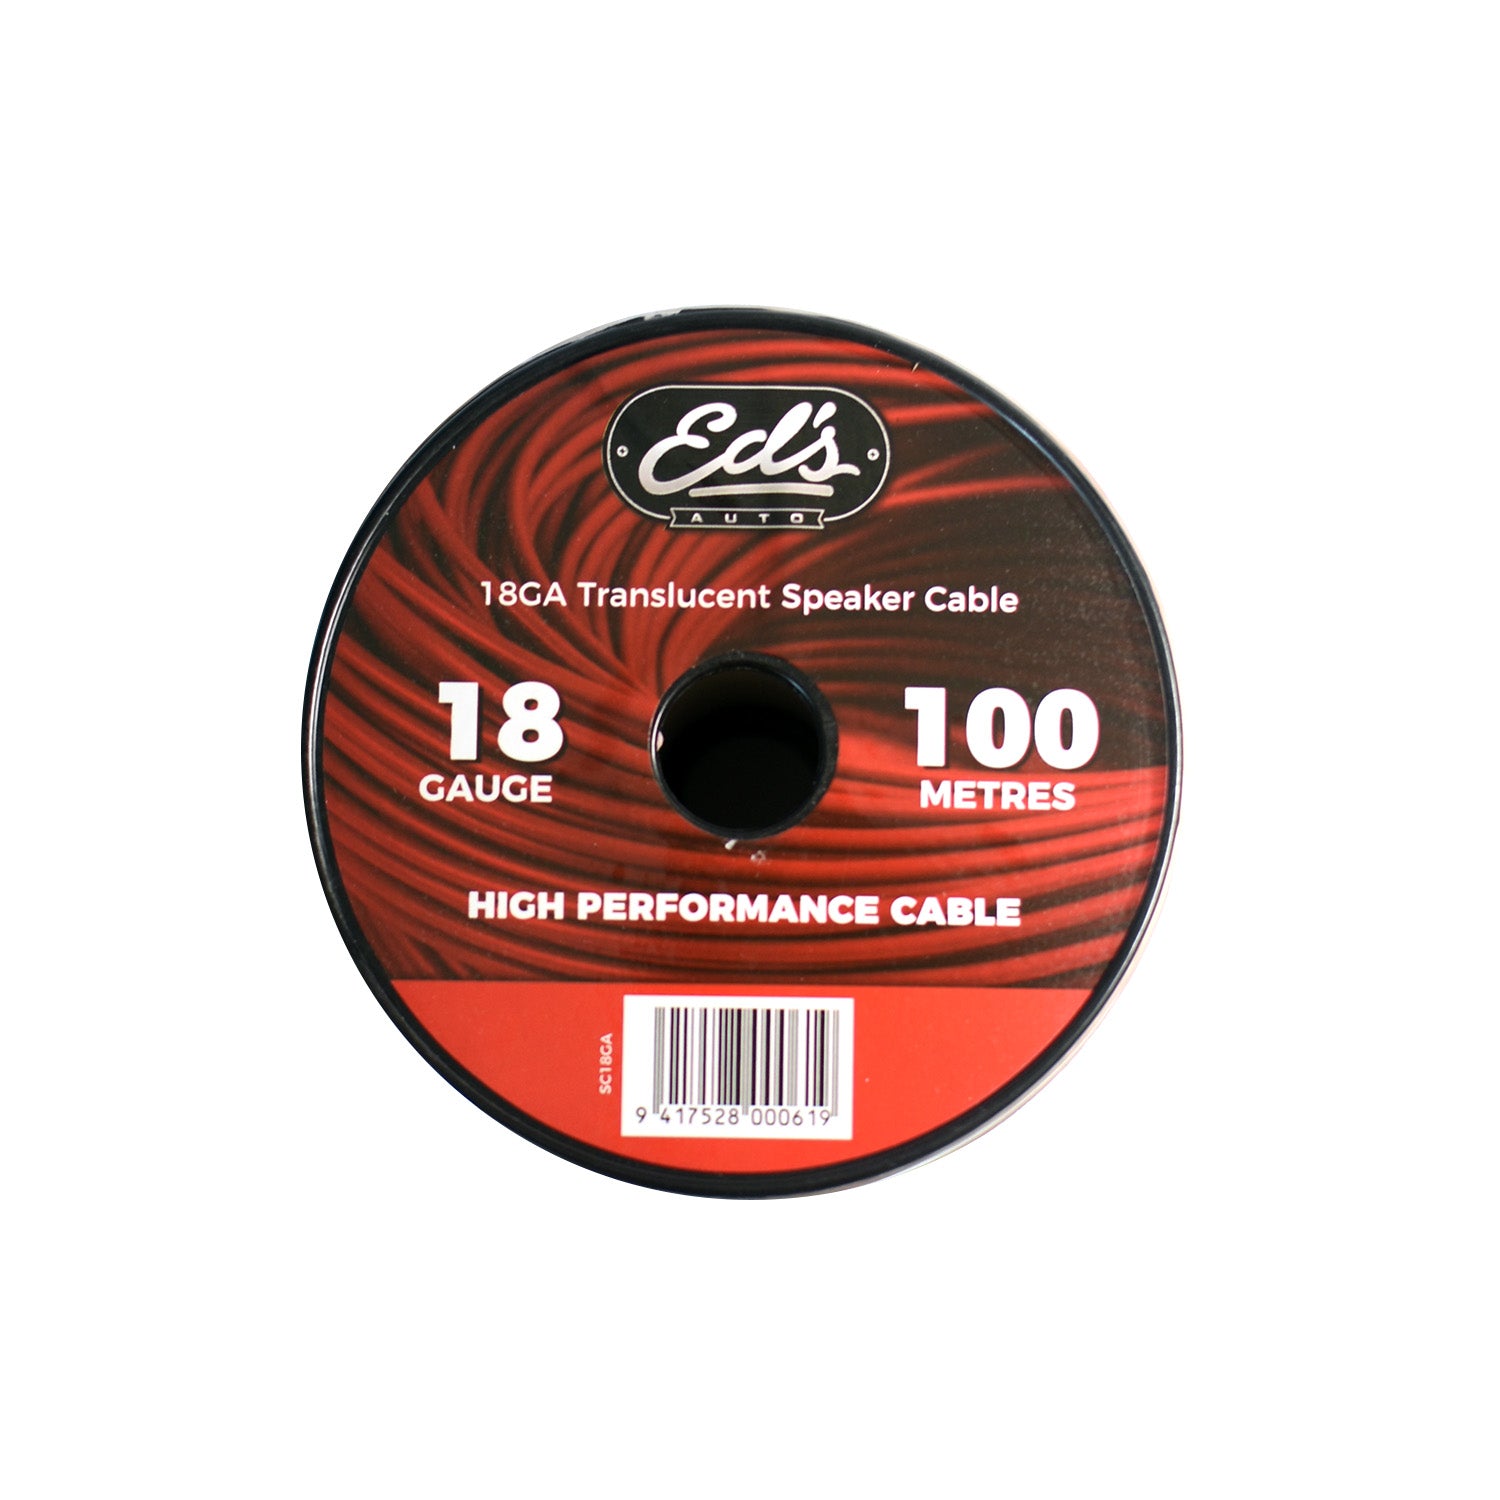 Eds 18 Gauge Cca Speaker Cable Matt Flexible Translucent Clear 100M